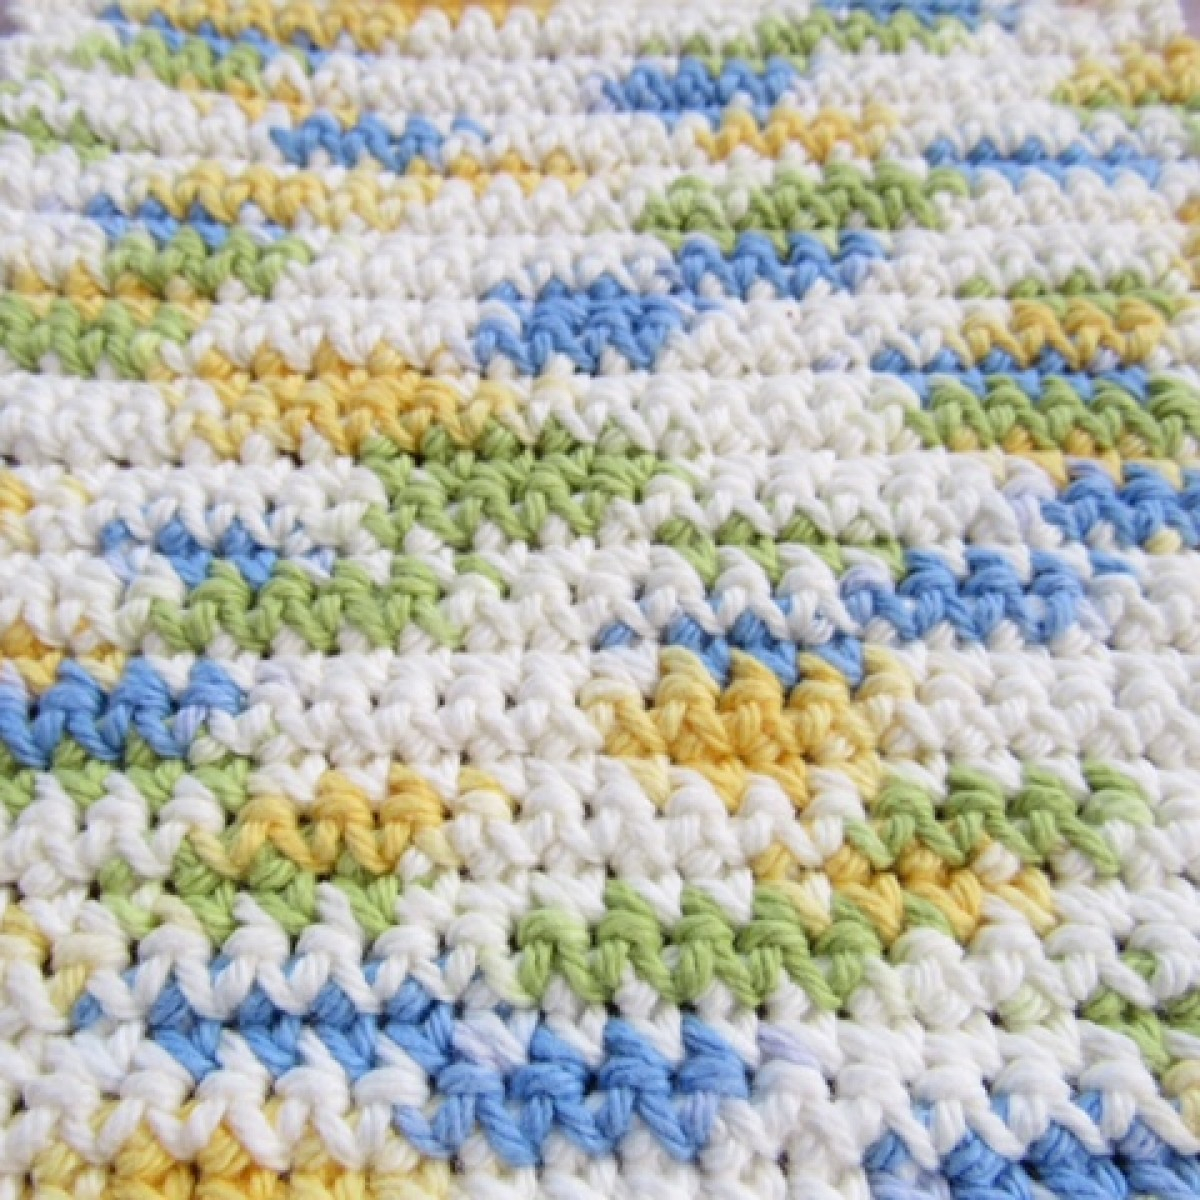 Crochet Dishcloth Pattern Easiest Crochet Project Ever Stitch A Dishcloth